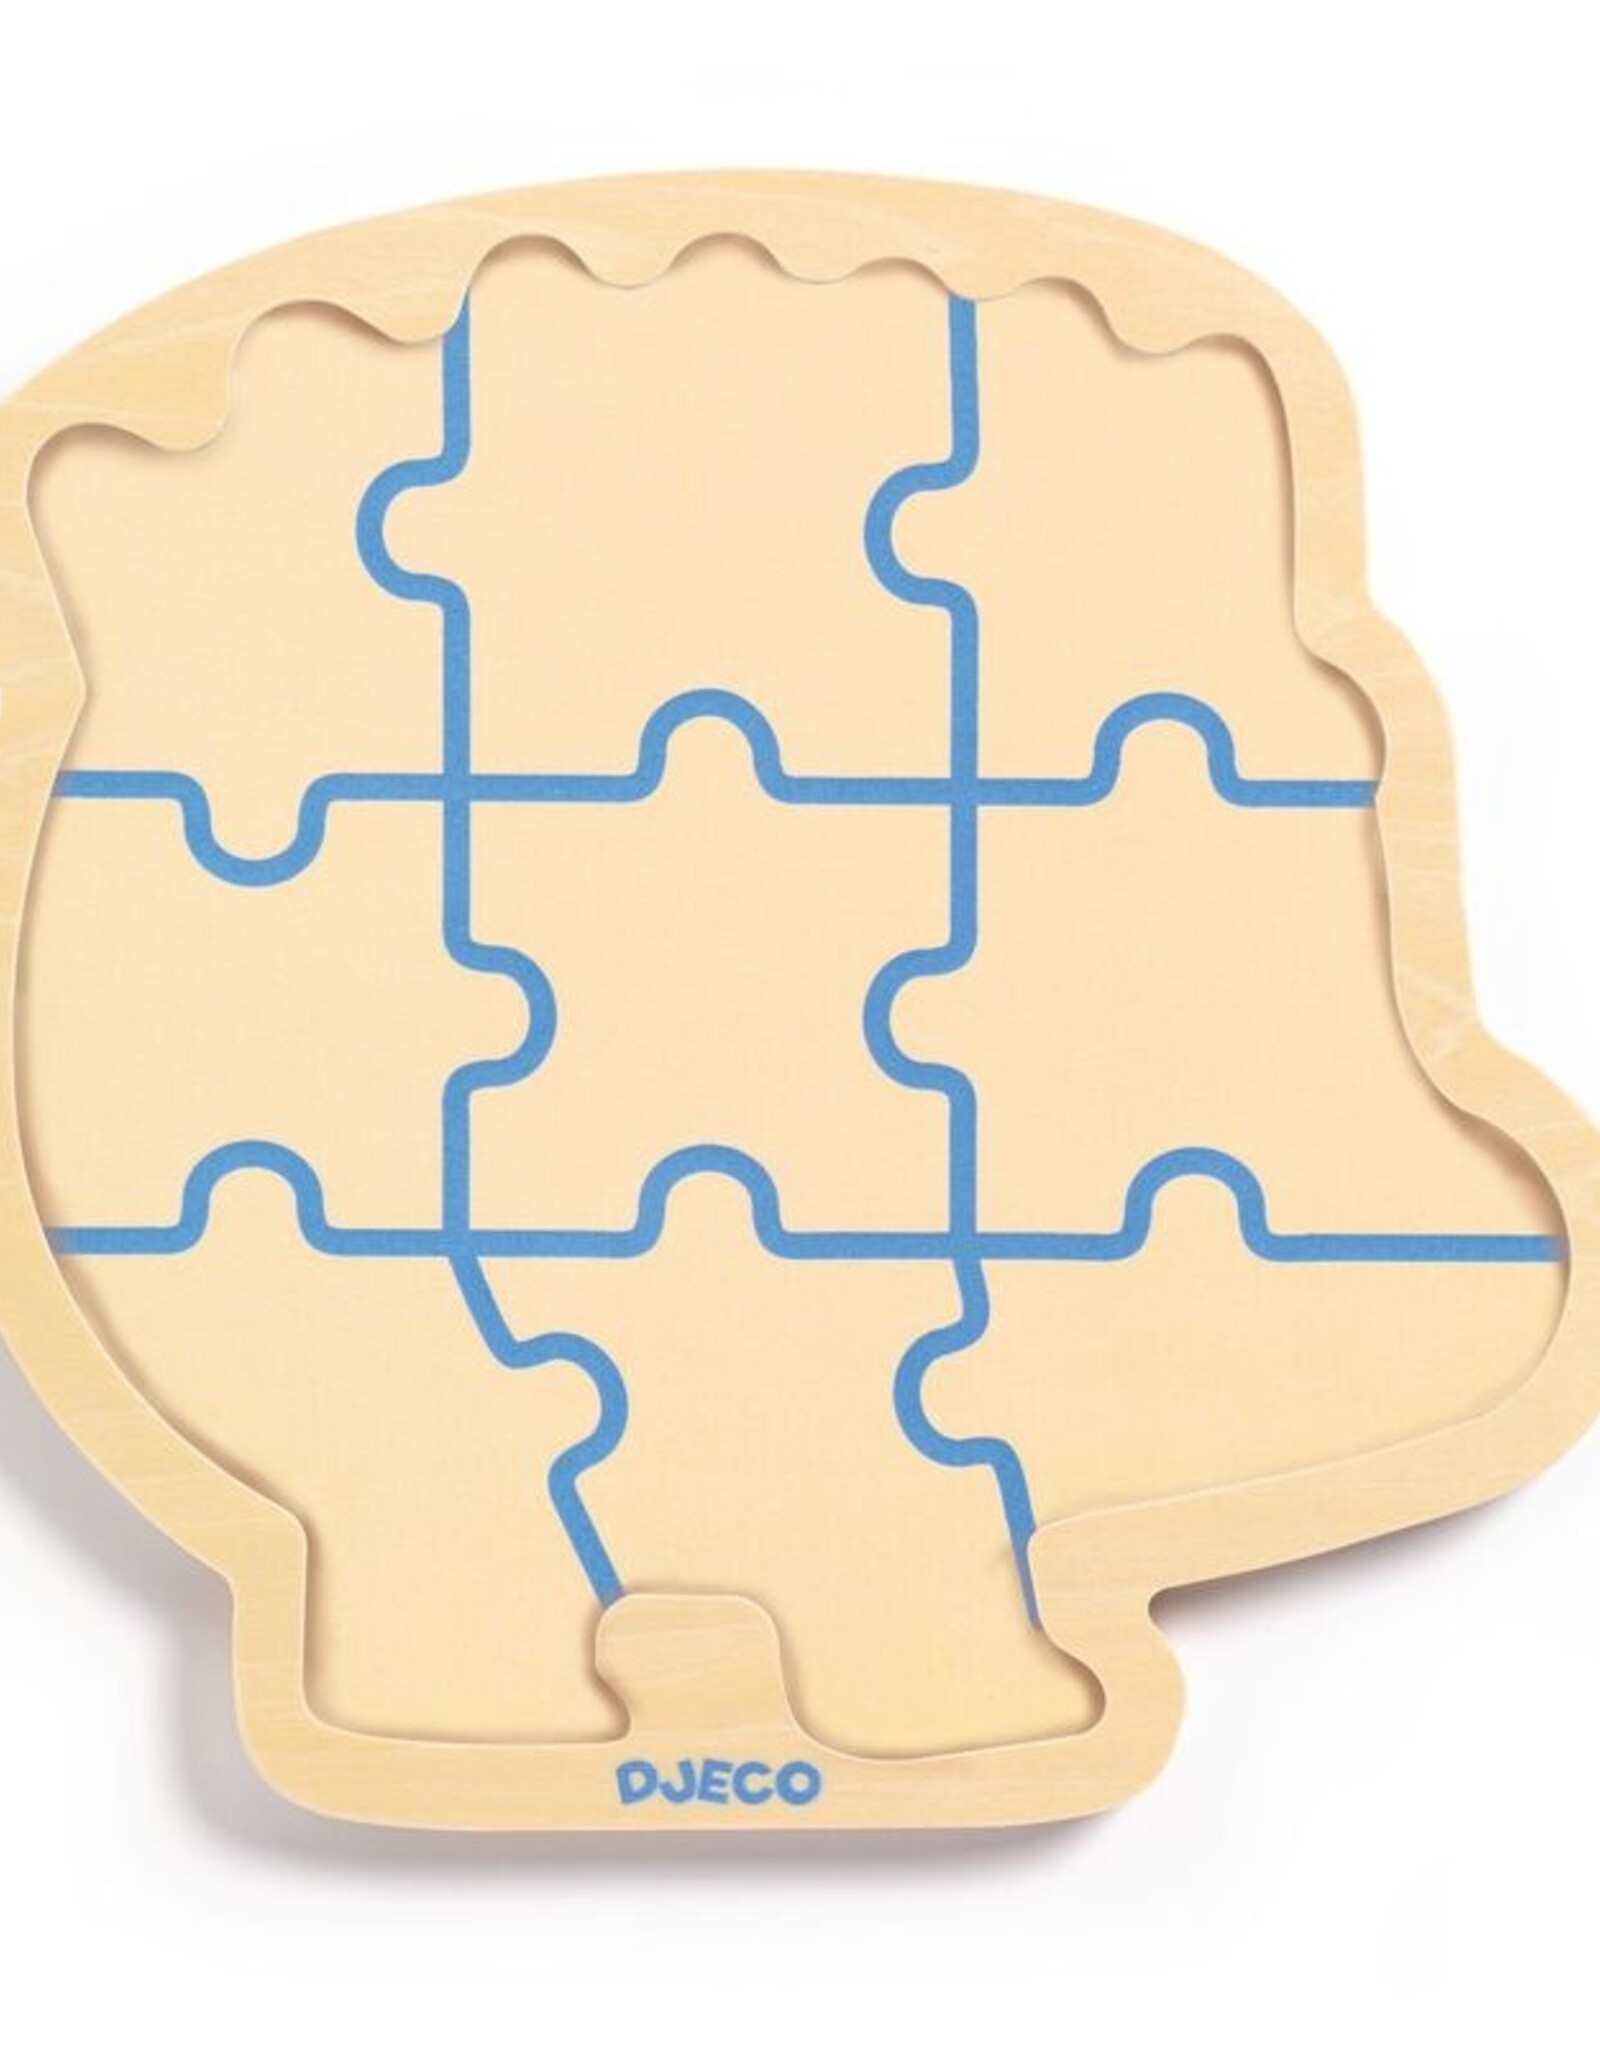 Djeco Djeco - Hedgehog Wooden Jigsaw Puzzle 9pce